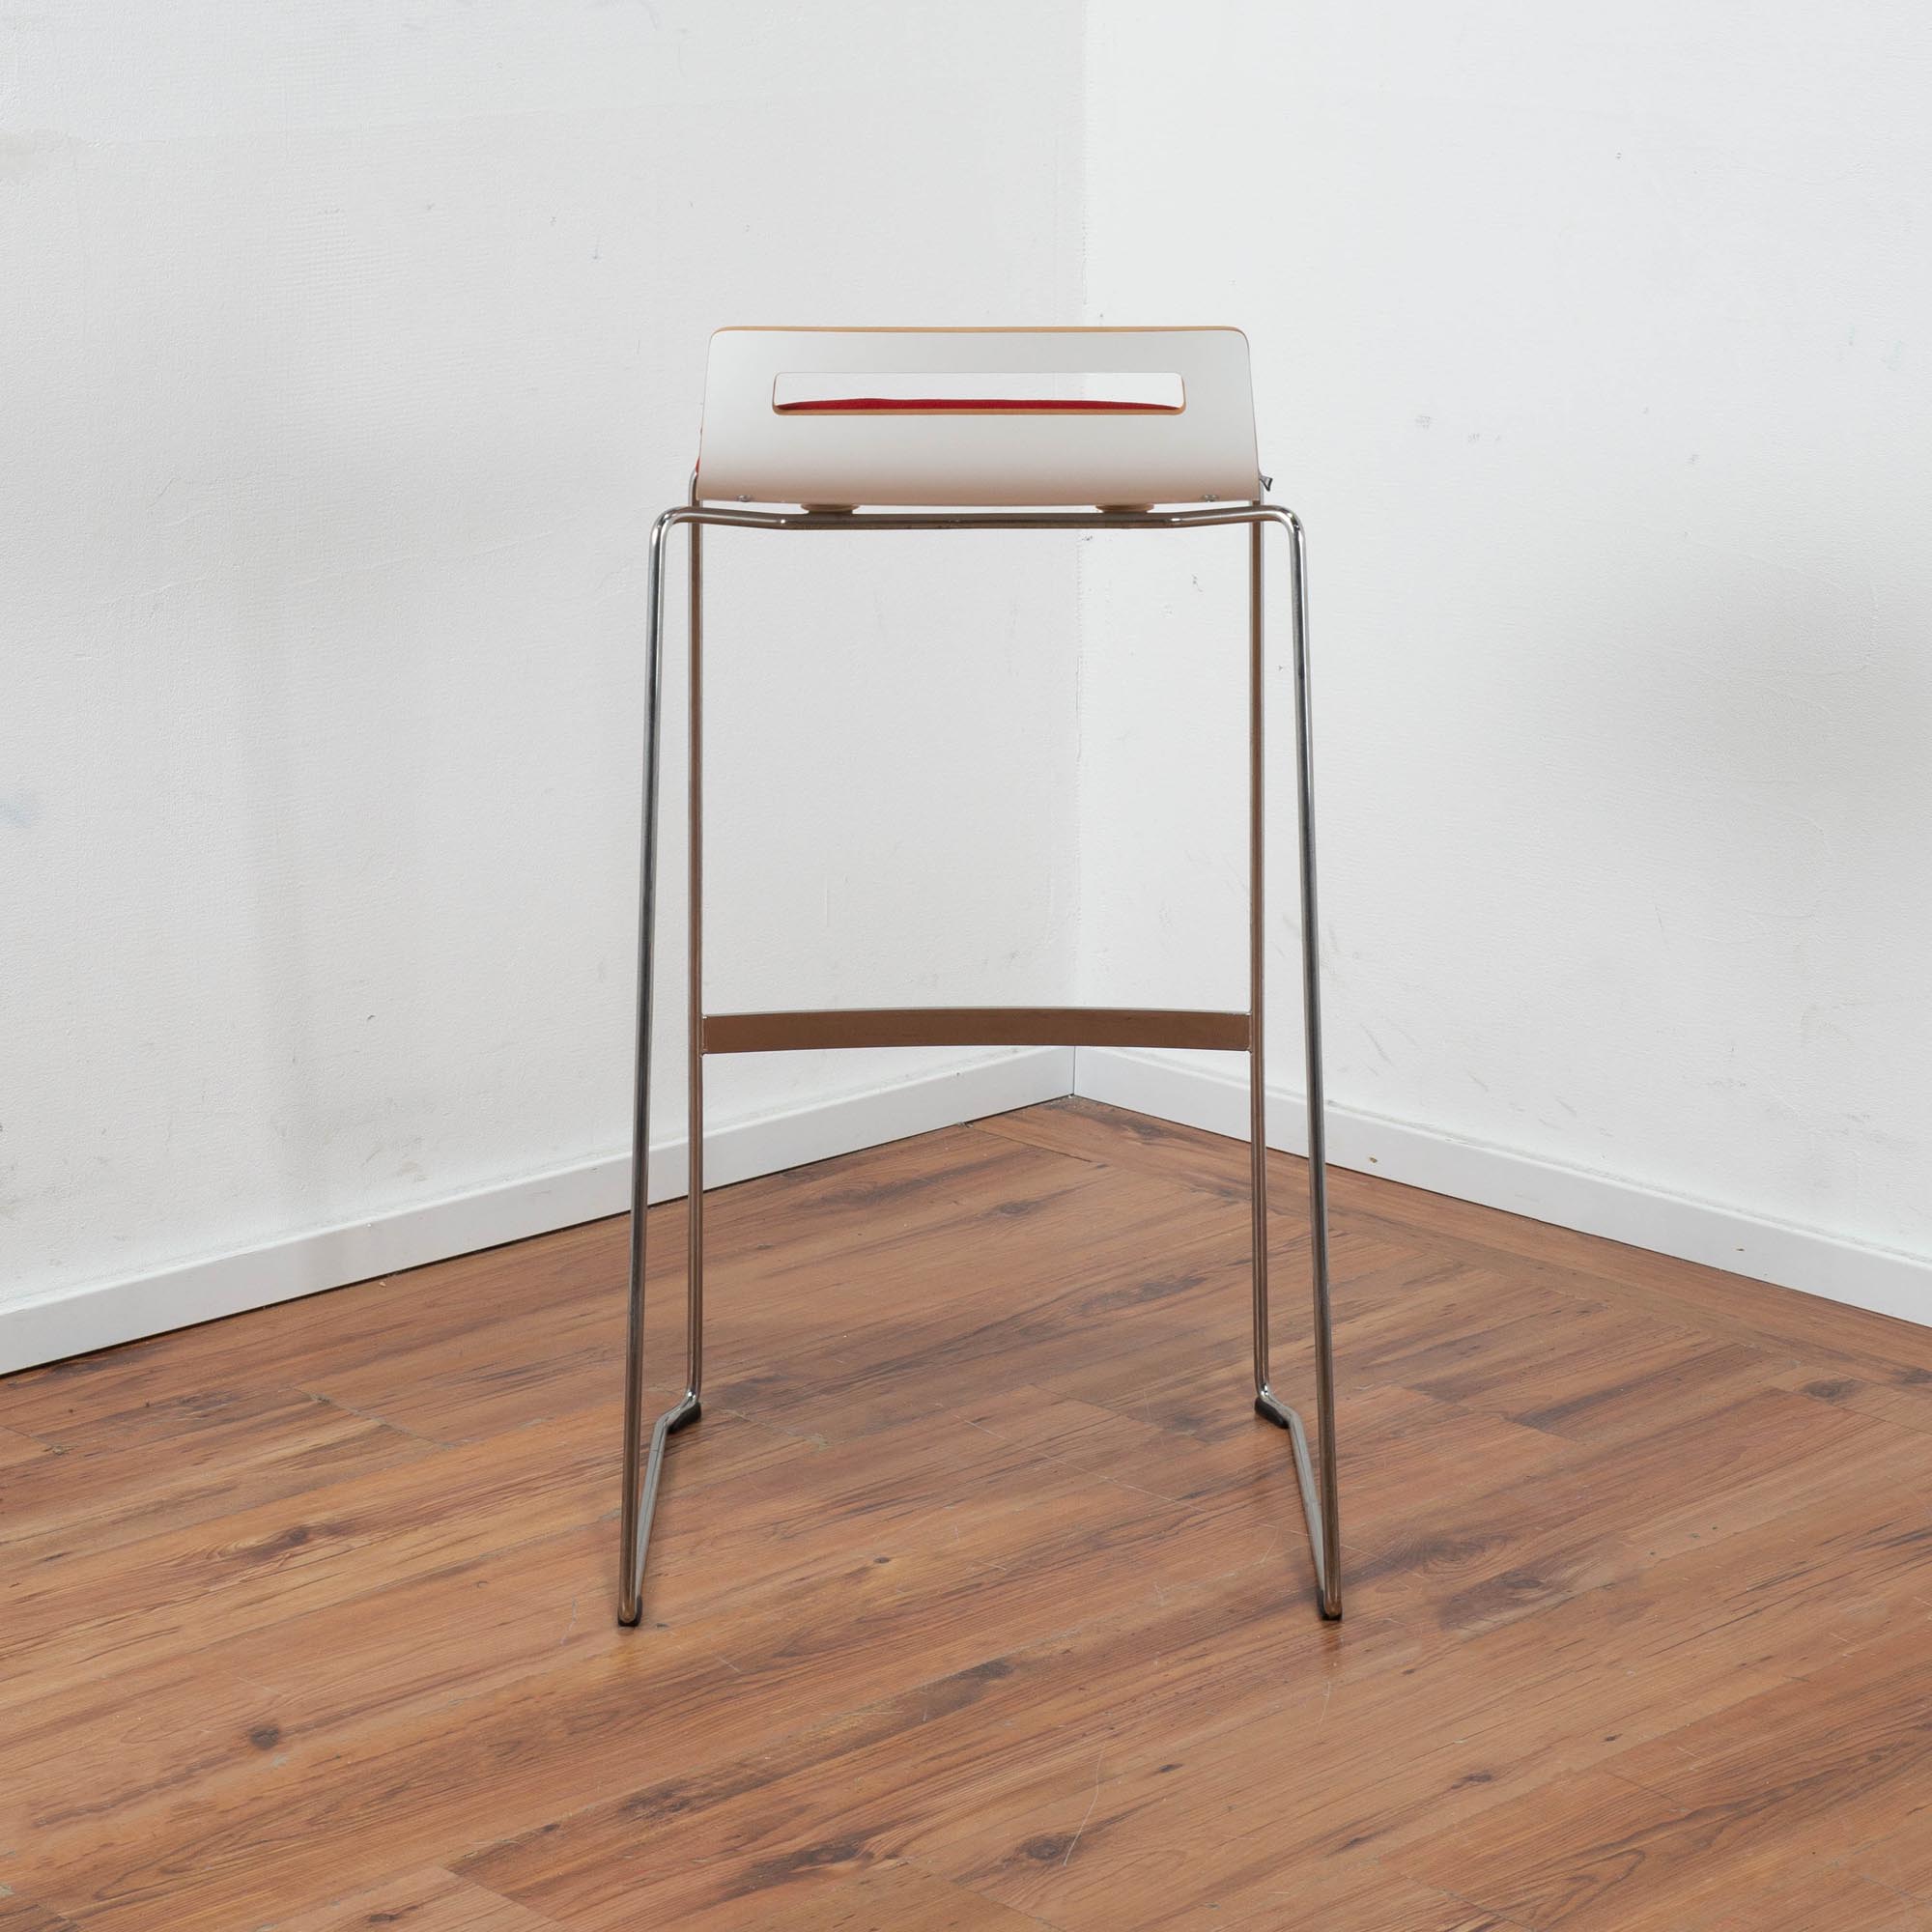 Sedus "Meet Chair" Hocker - Sitzauflage rot - stapelbar - Chromgestell - Fußleiste